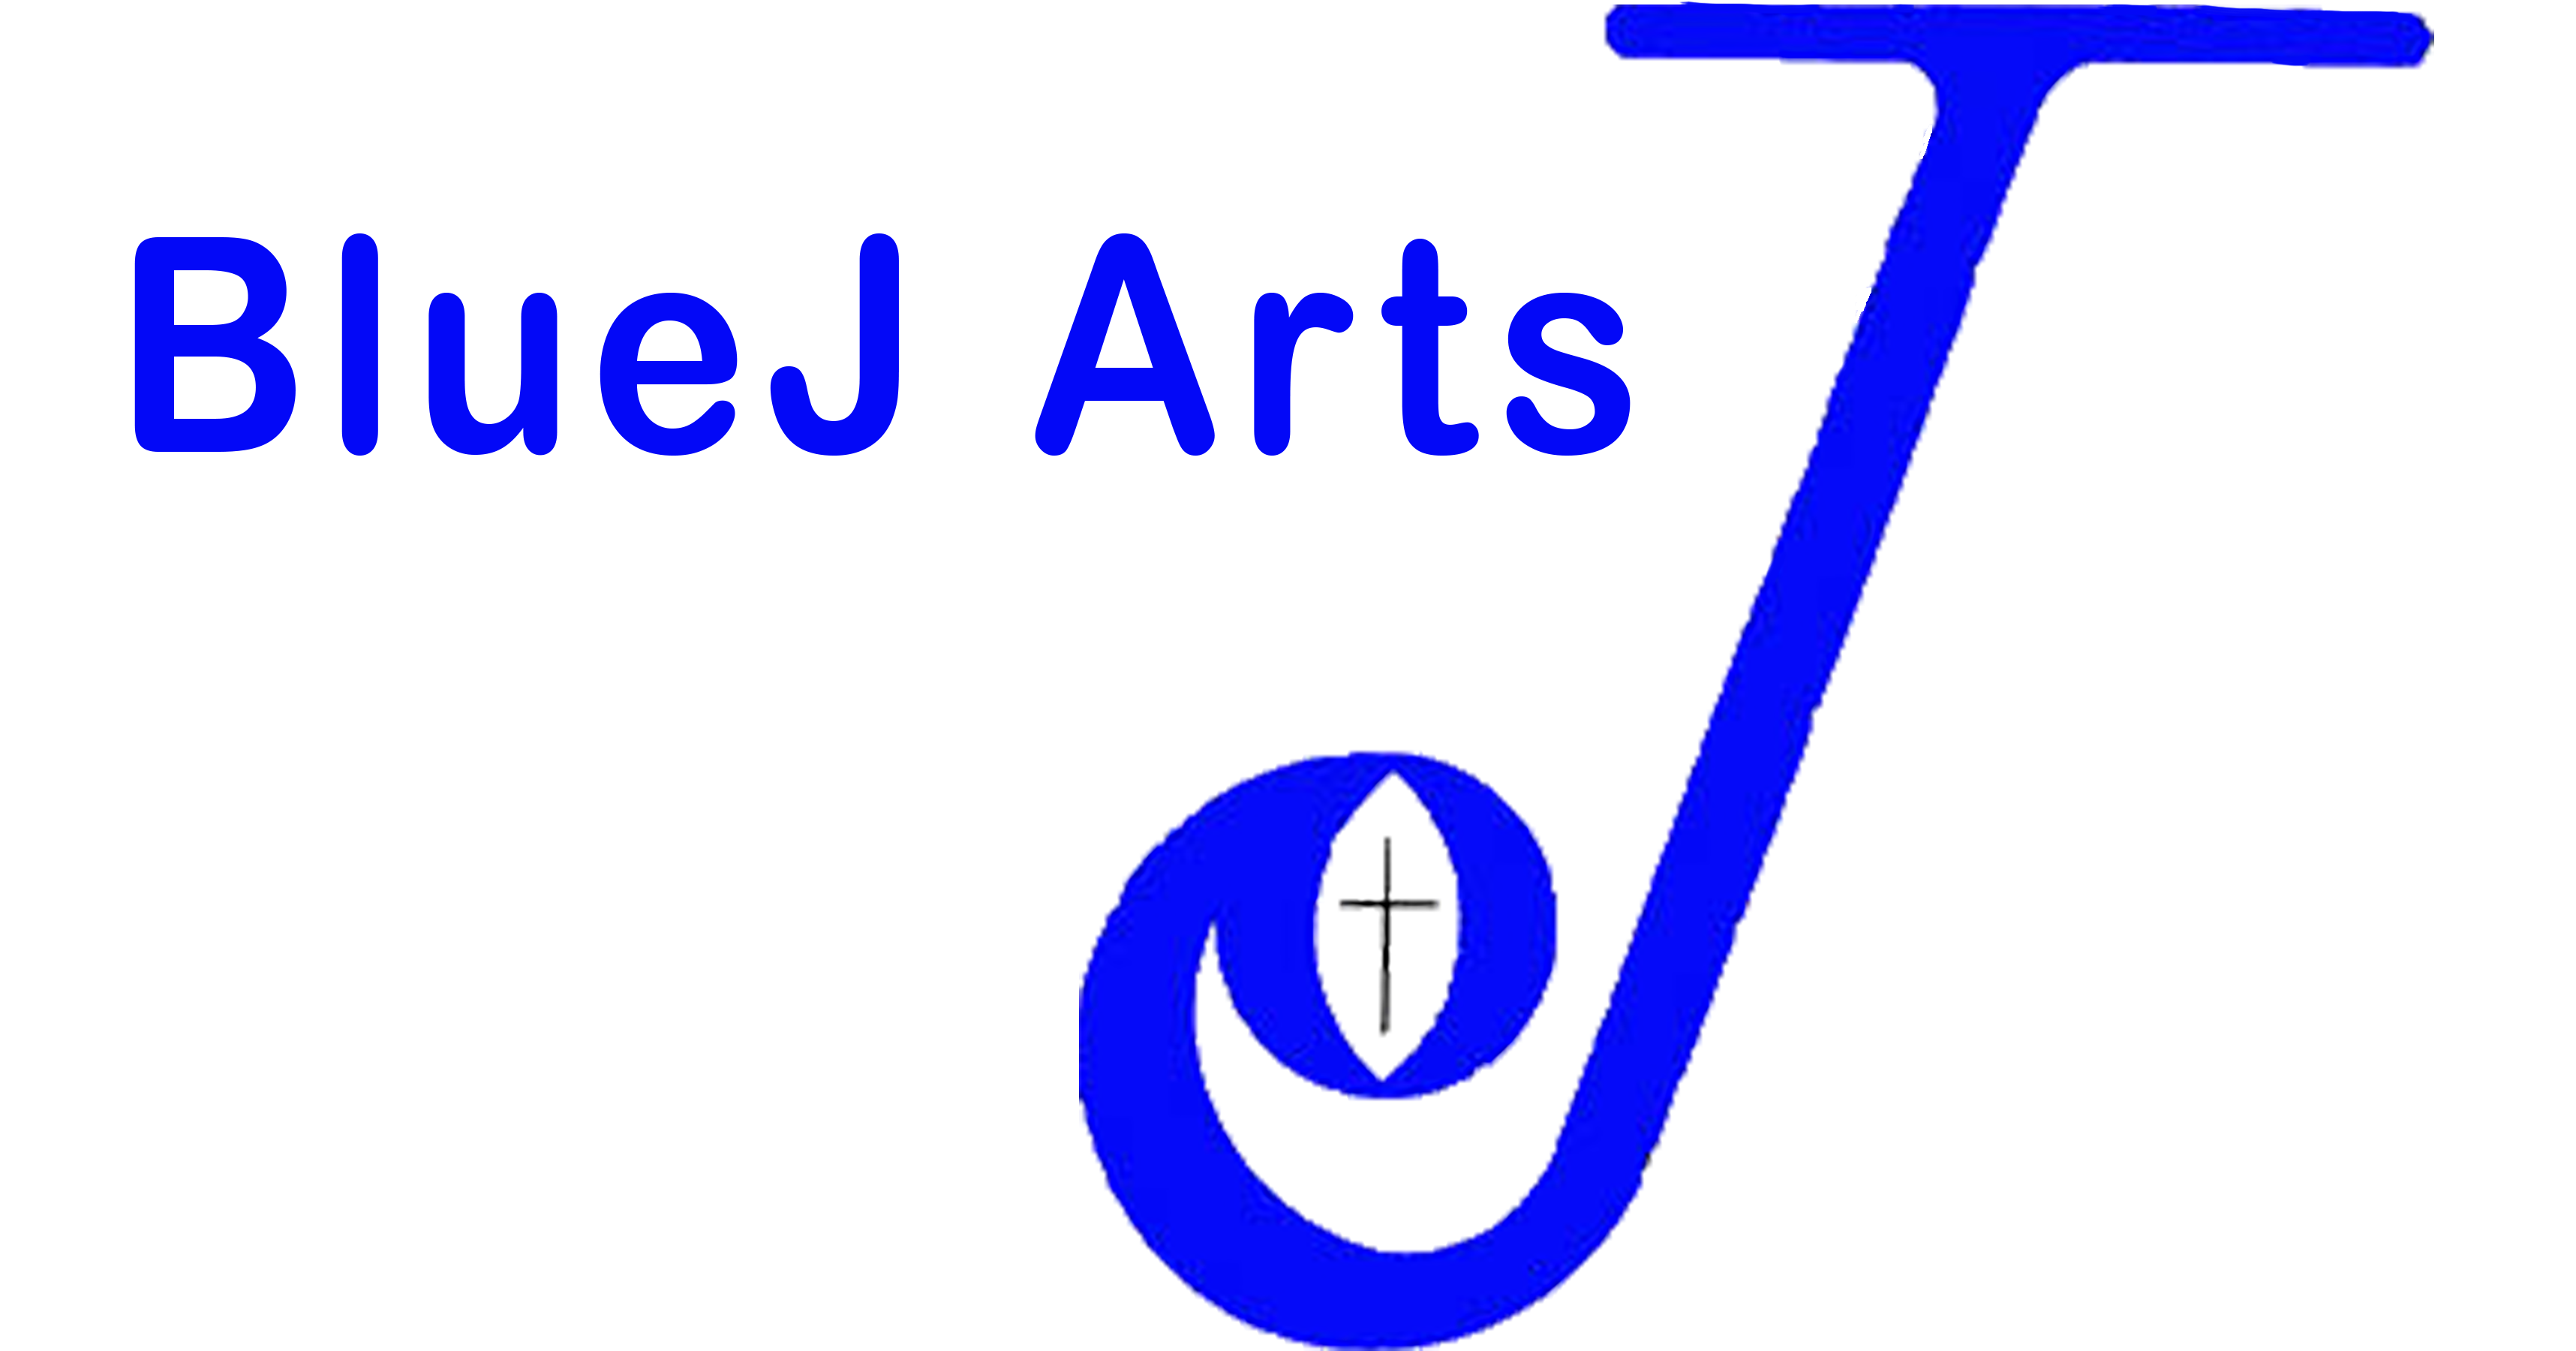 BlueJ Arts